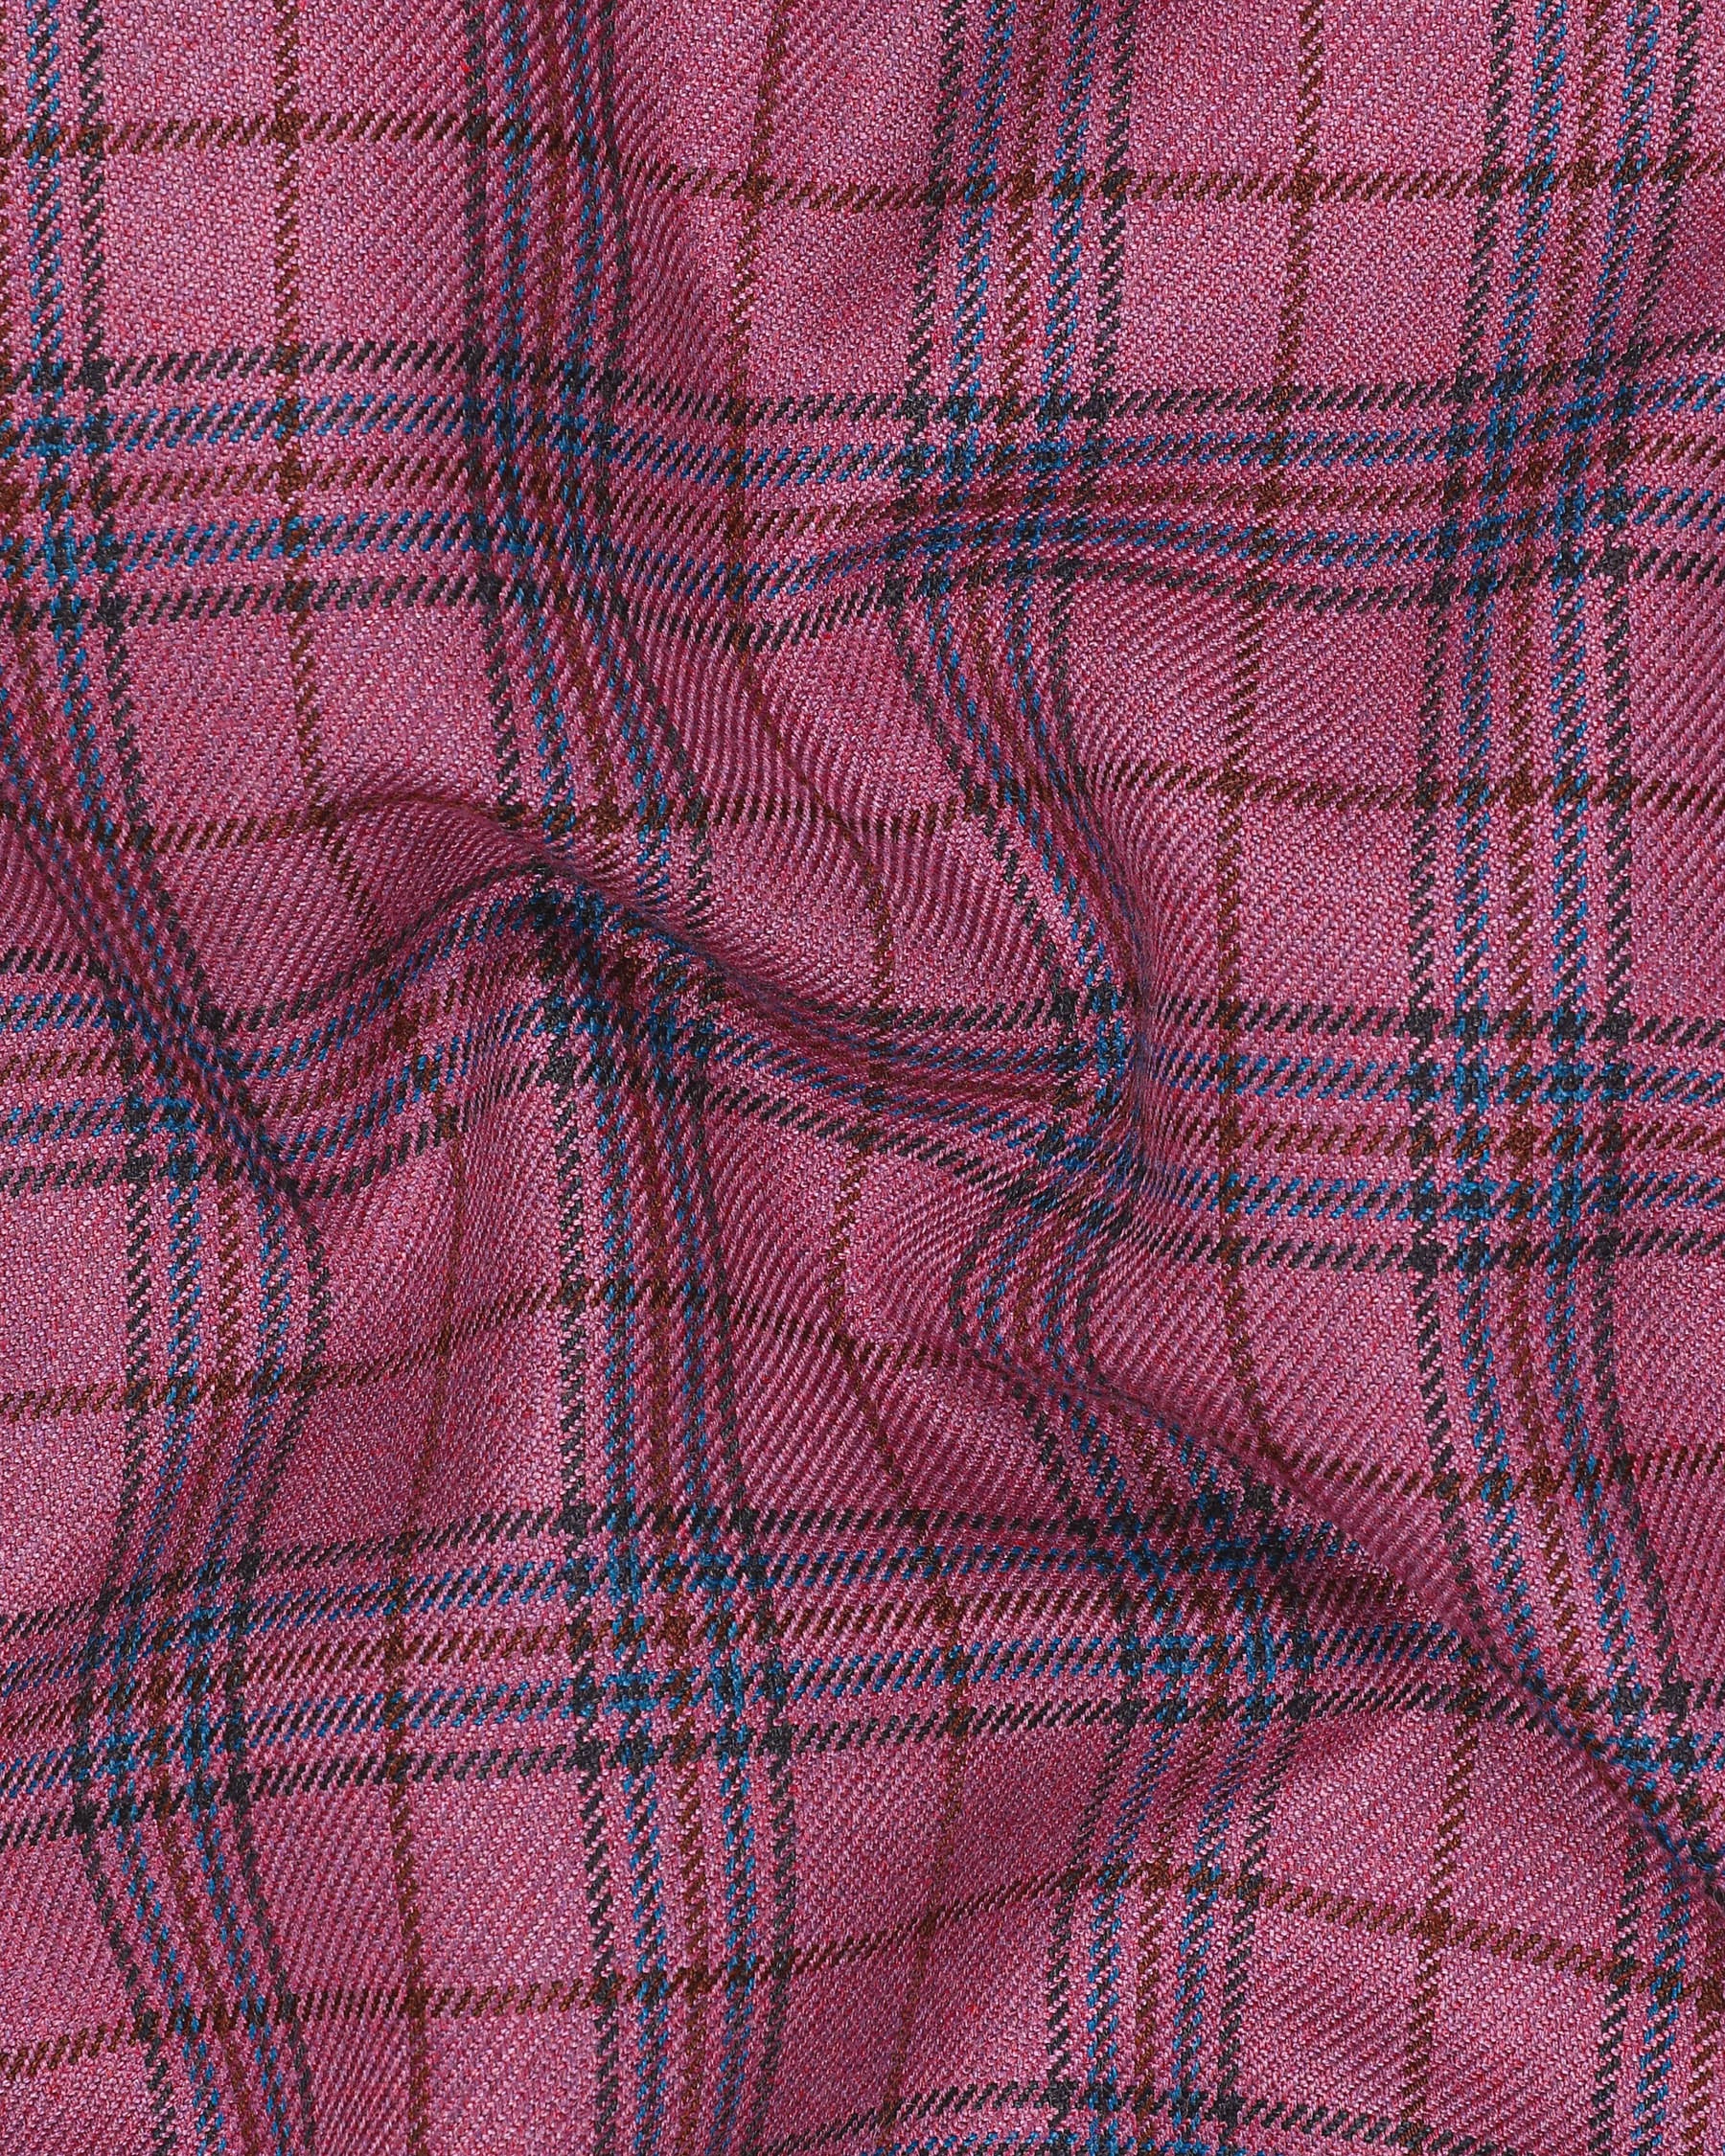 Tapestry Pink Checked Wool Rich Waistcoat V1196-36, V1196-38, V1196-40, V1196-42, V1196-44, V1196-46, V1196-48, V1196-50, V1196-52, V1196-54, V1196-56, V1196-58, V1196-60